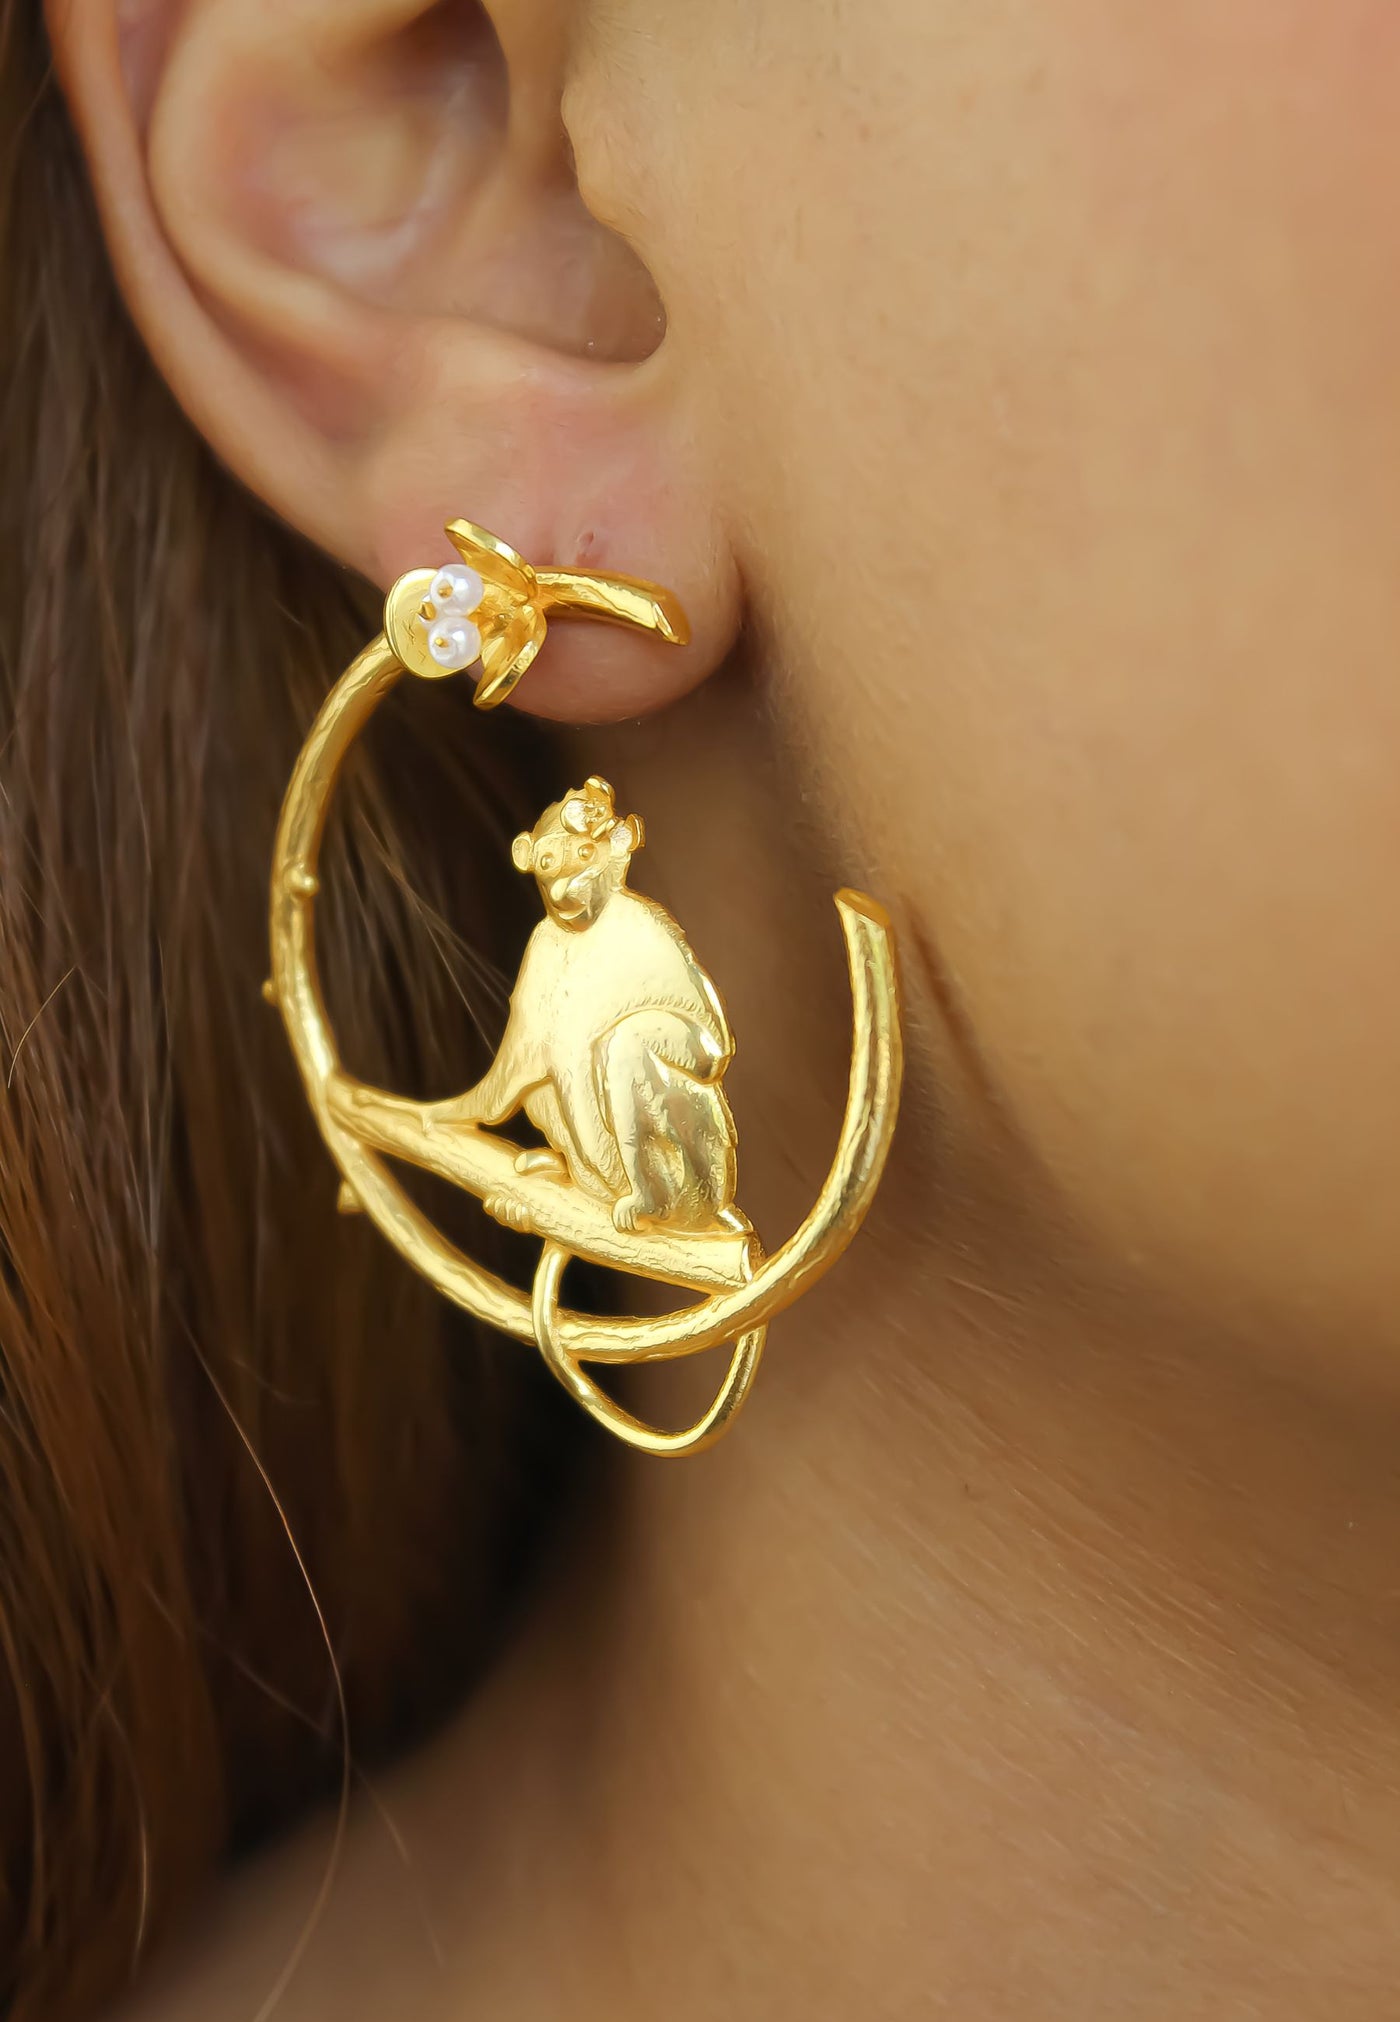 Monkey Earrings for Sale in New York, NY - OfferUp